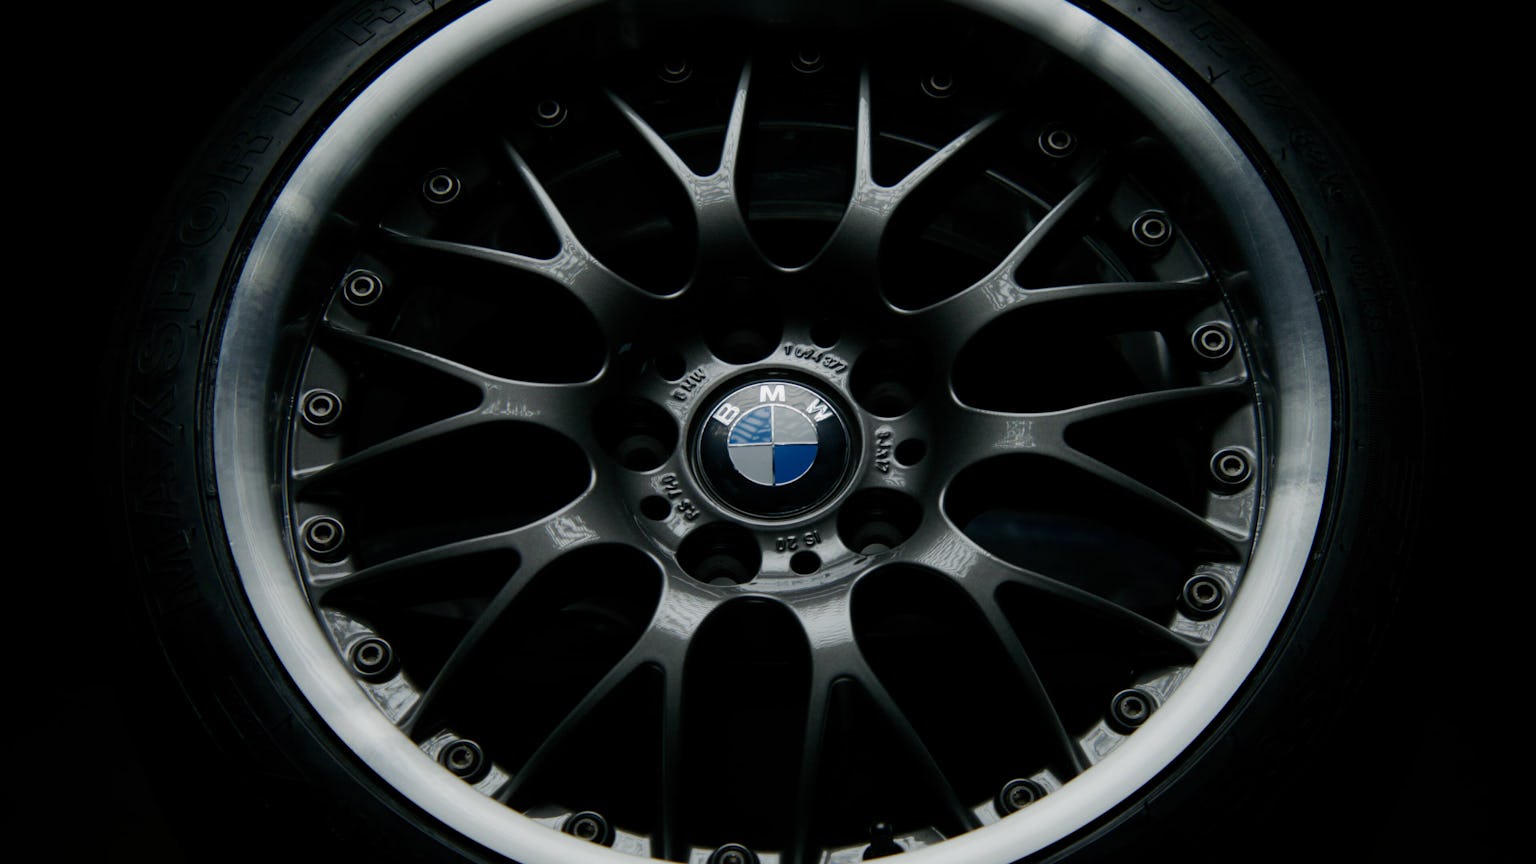 Refurnished BMW split rim alloy wheel in gun metal gray